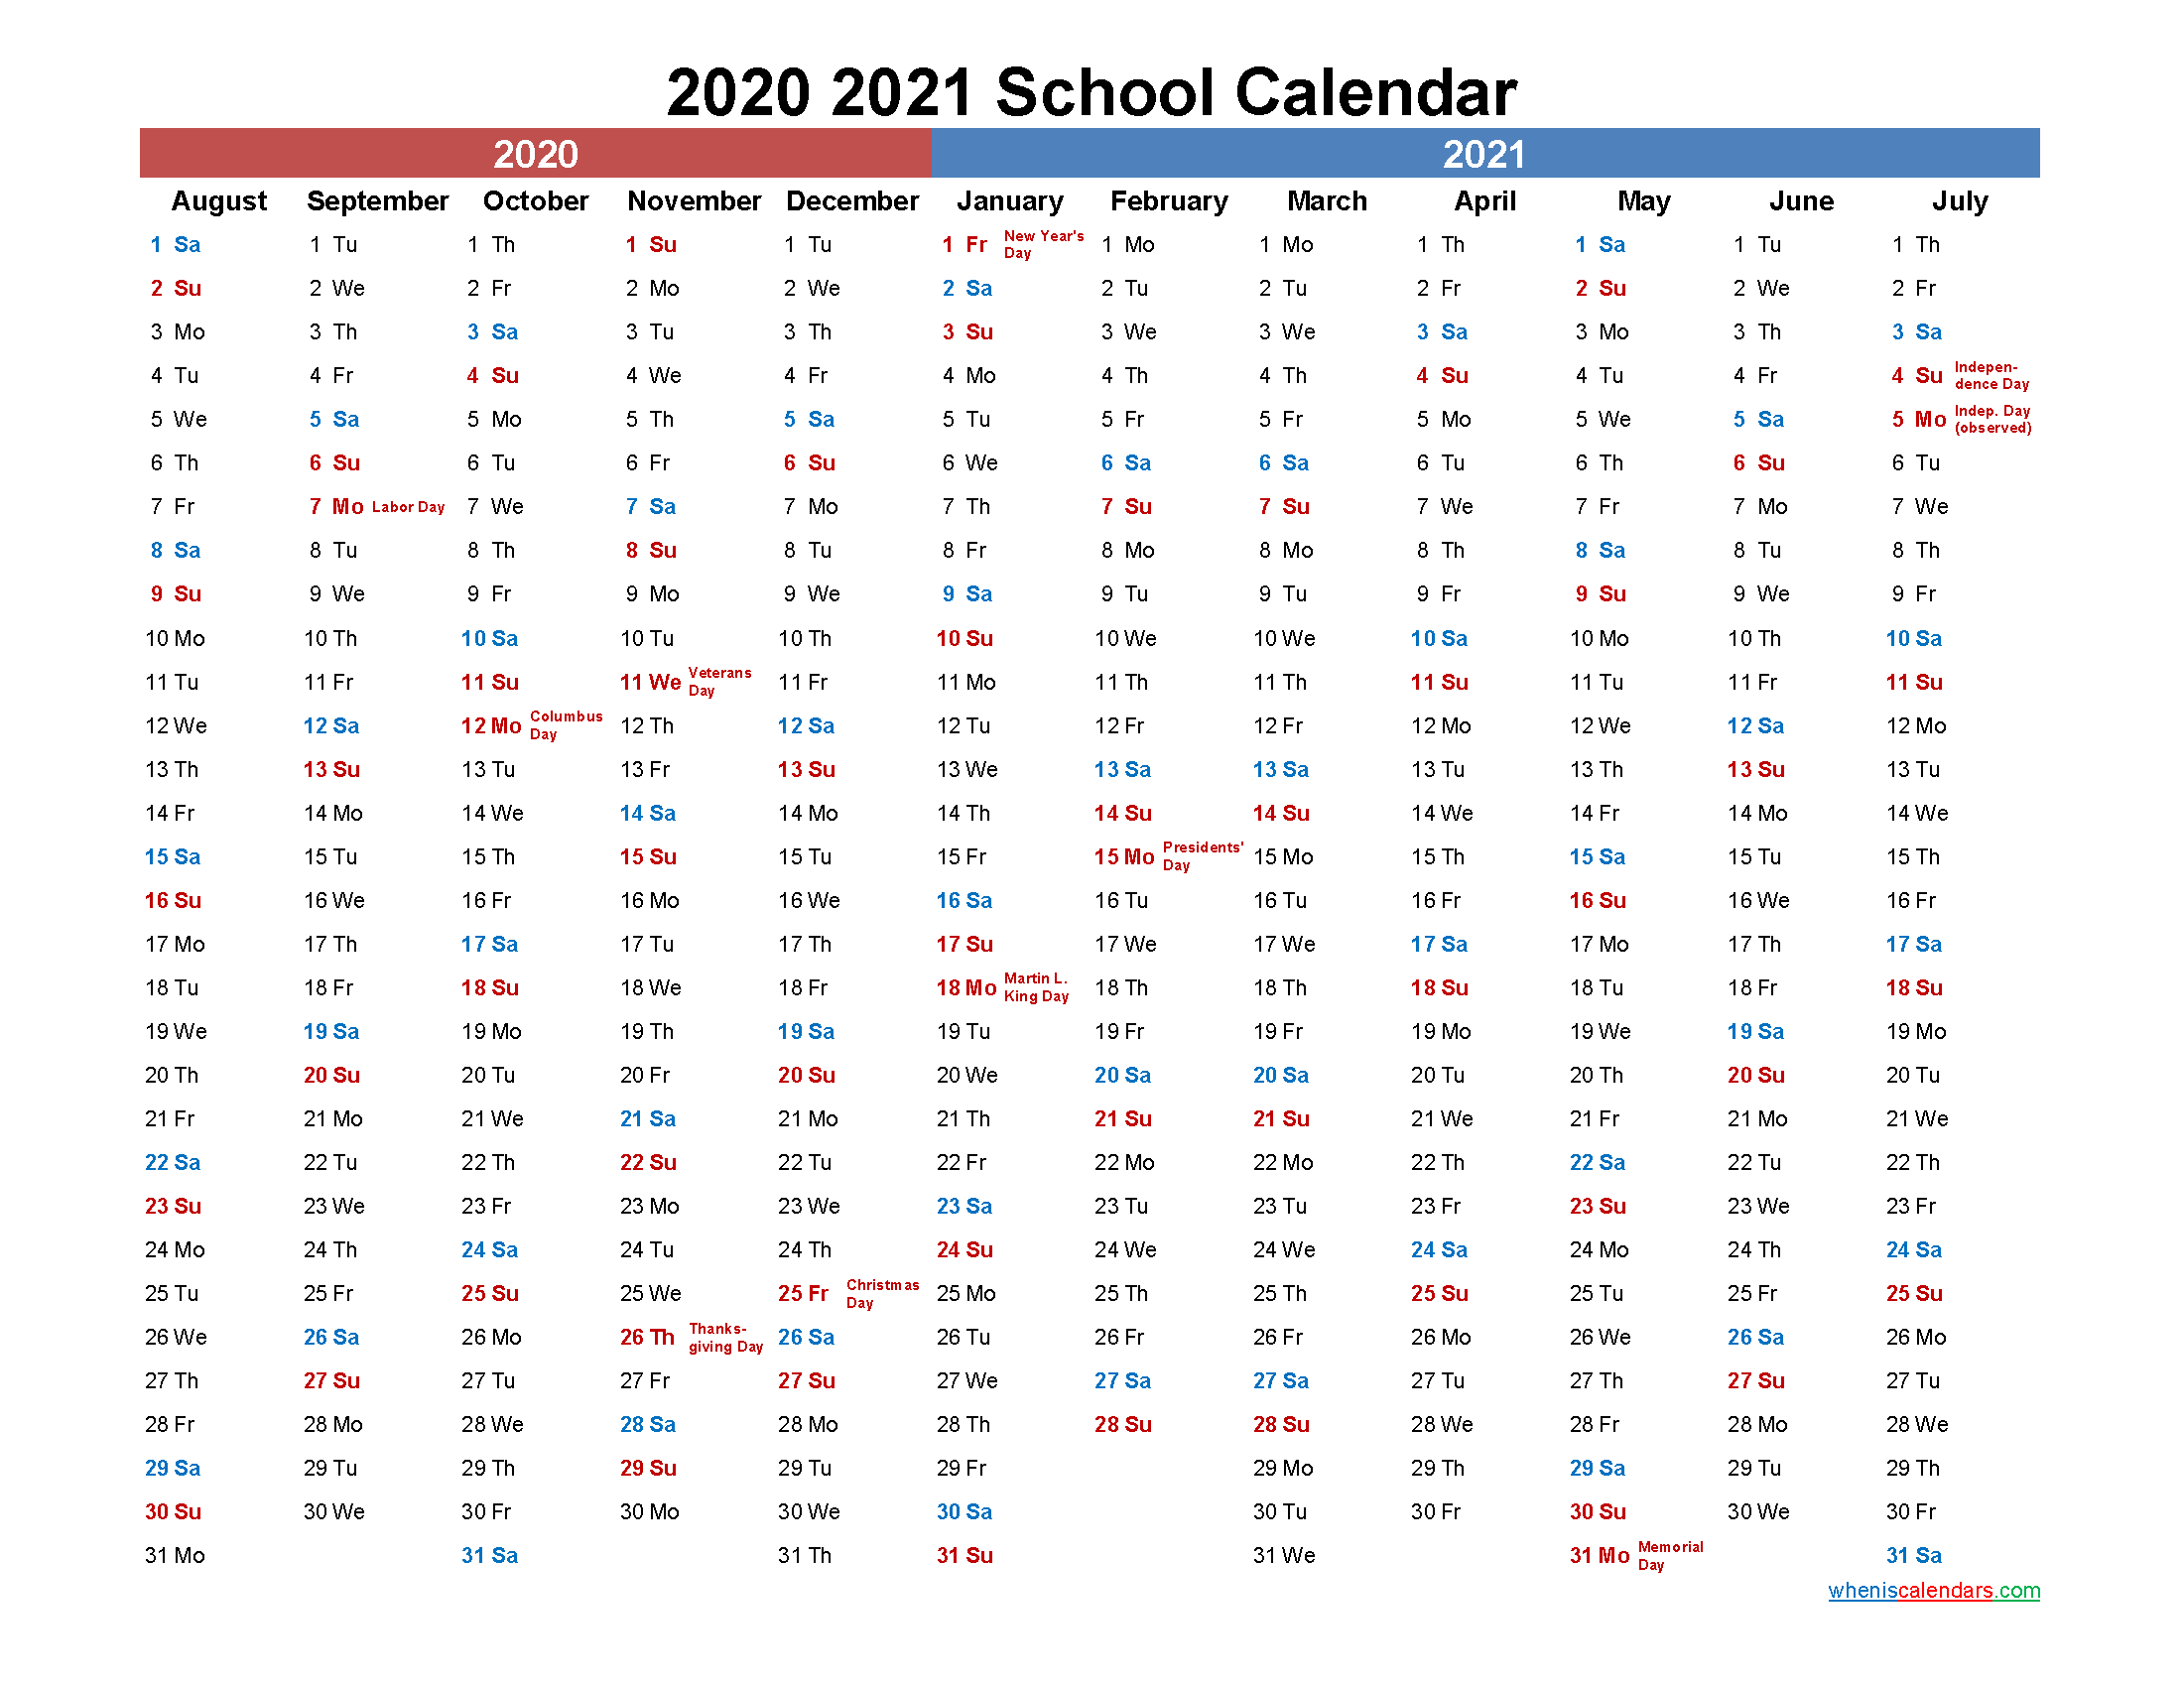 2020 and 2021 School Calendar Printable - Template No.21scl29